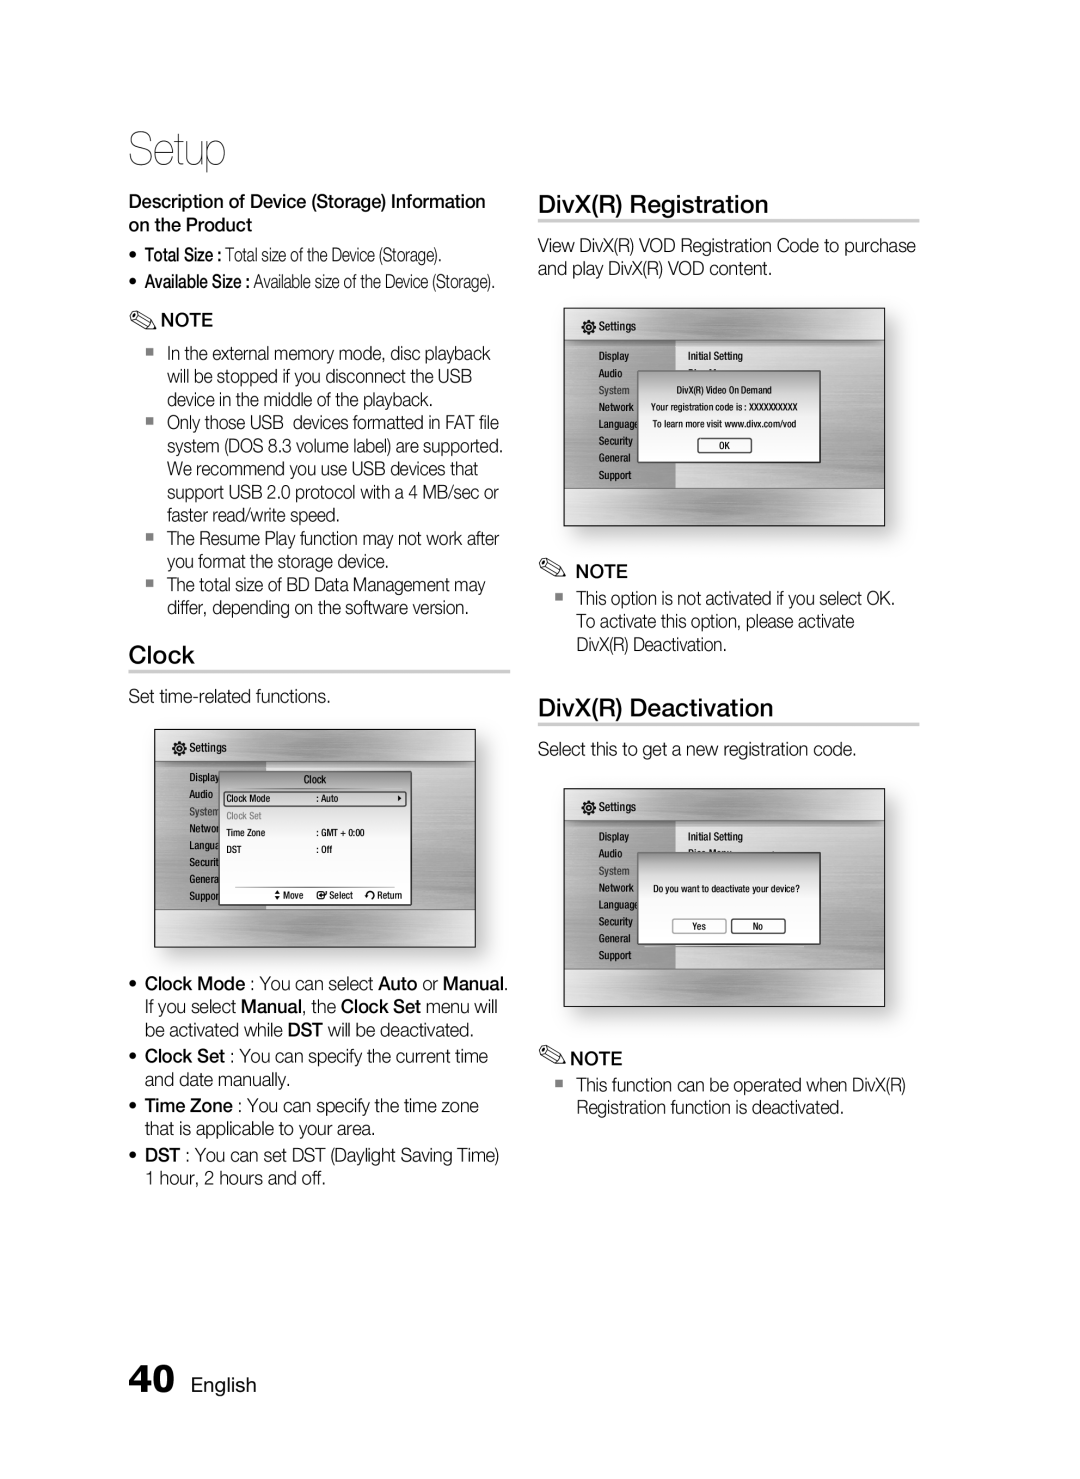 Samsung C6600 user manual Clock, DivXR Registration, DivXR Deactivation, English, Setup 